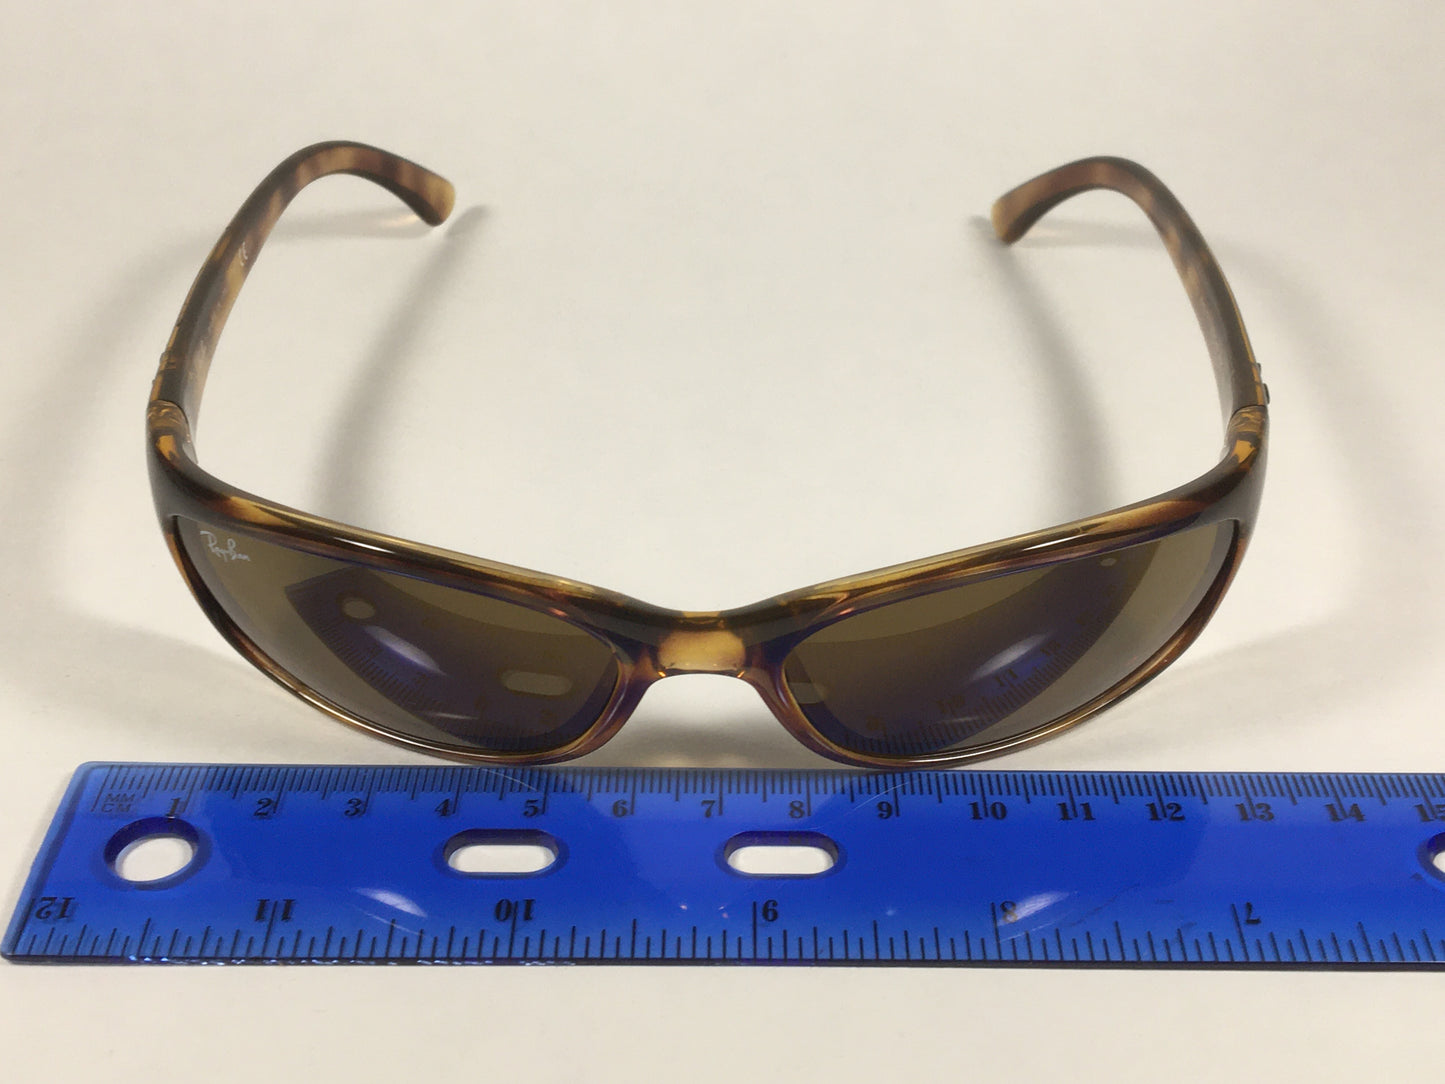 Ray-Ban Small Predator Active Lifestyle Sunglasses Brown Havana Frame Brown Lens RB4115 642/73 - Sunglasses